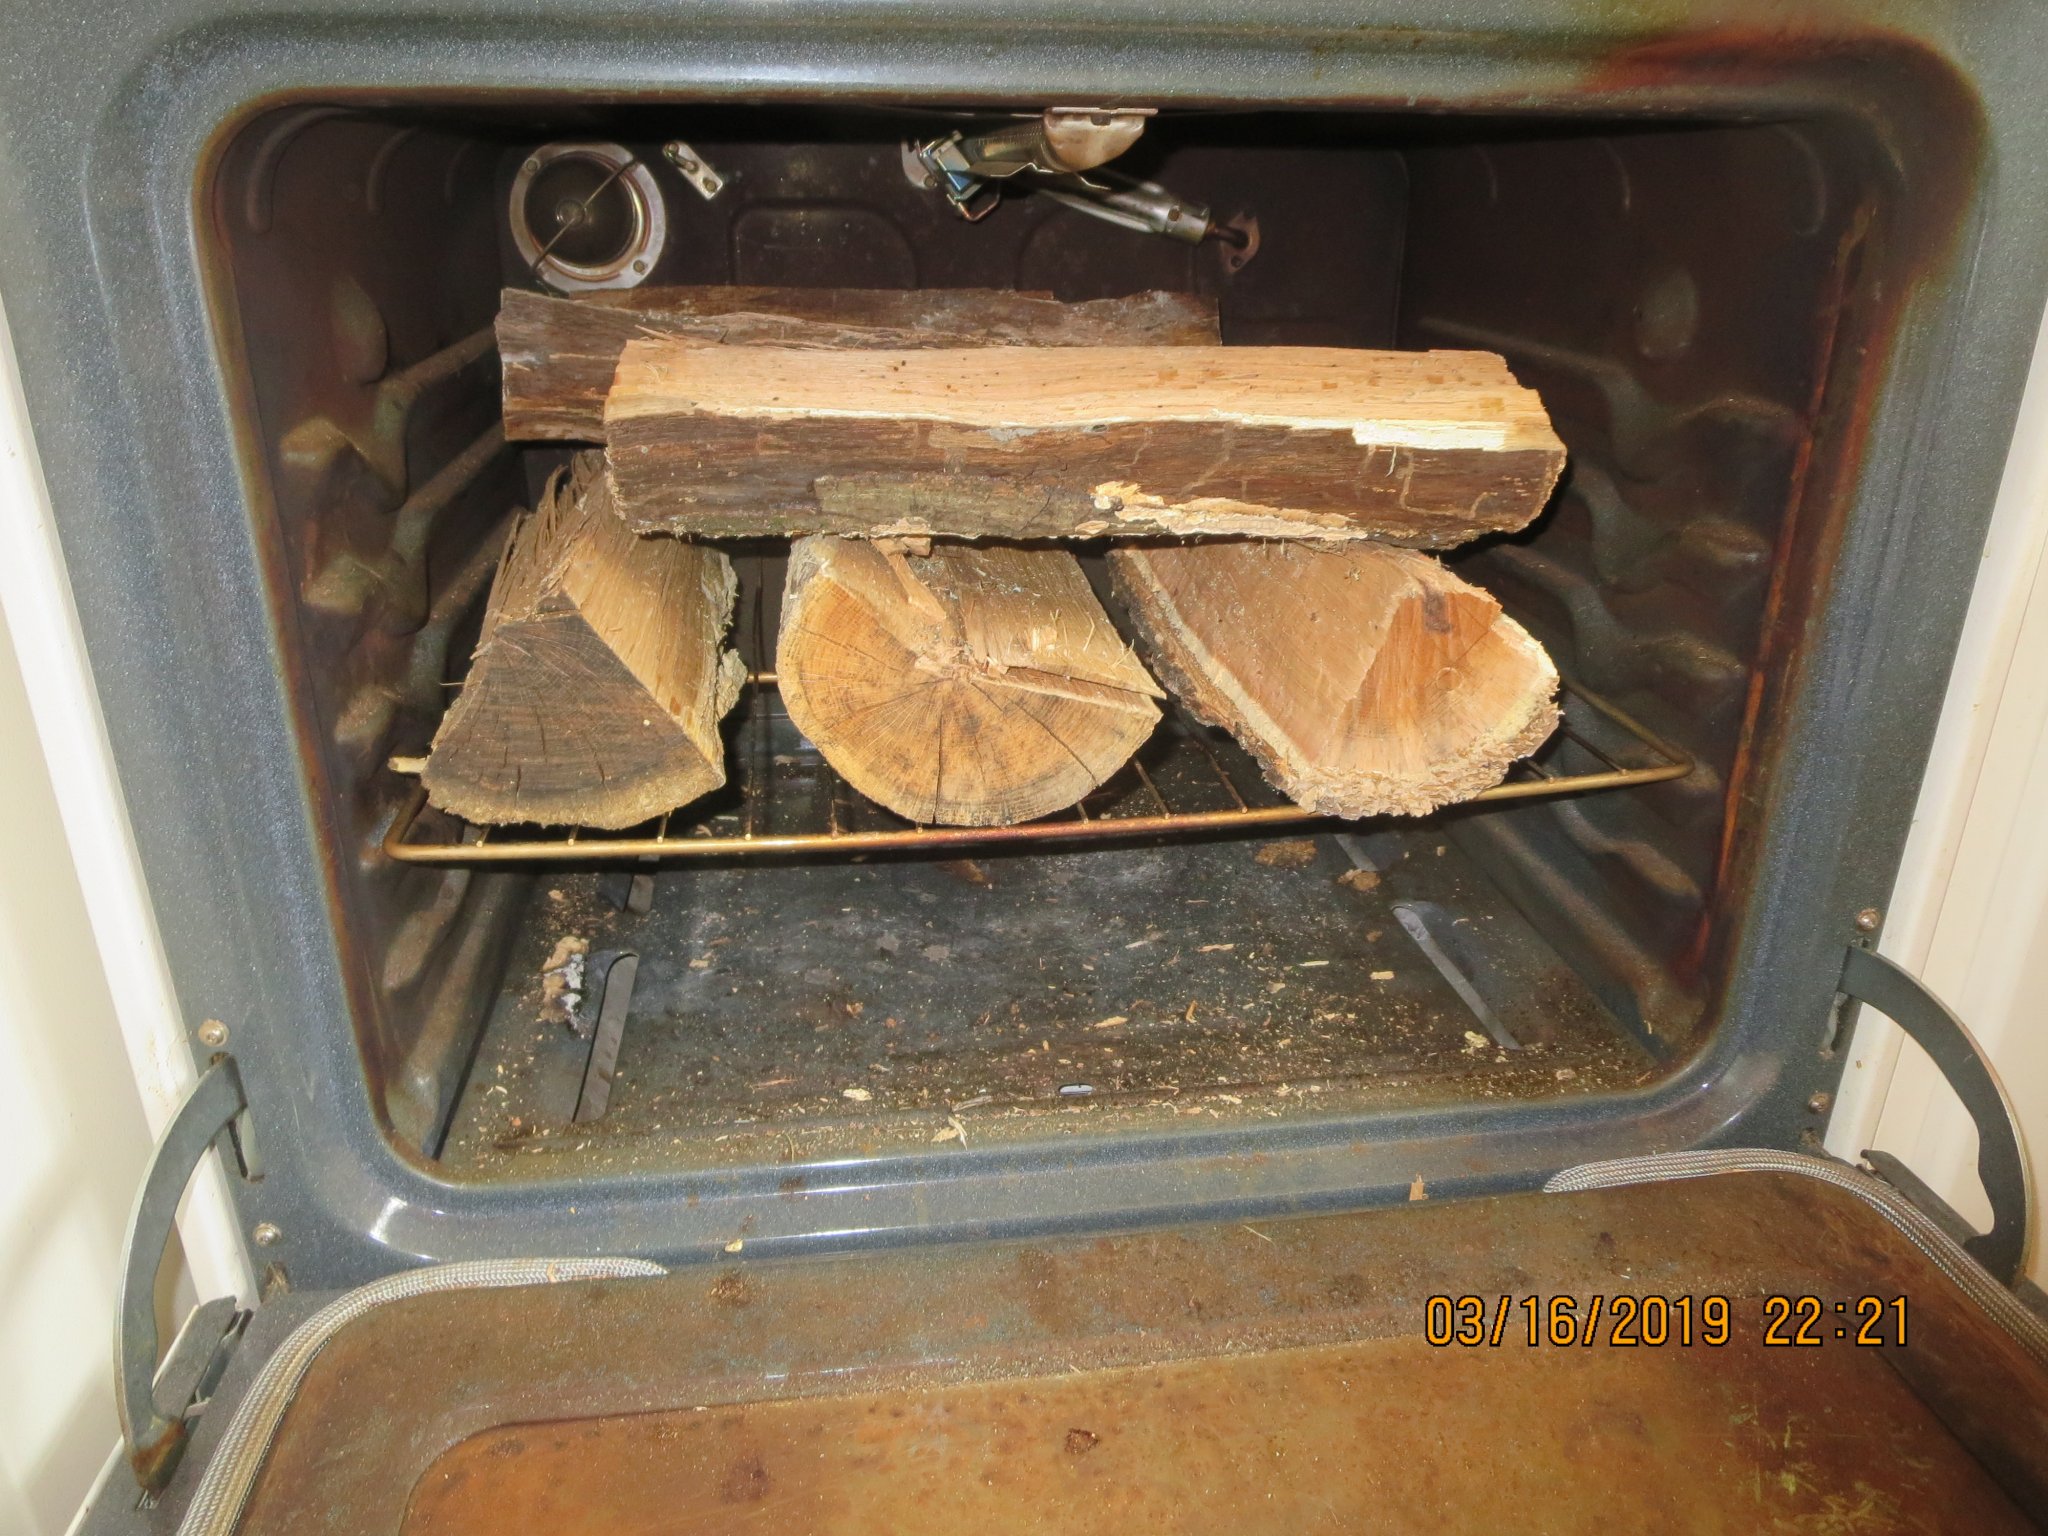 Firewood in oven.JPG